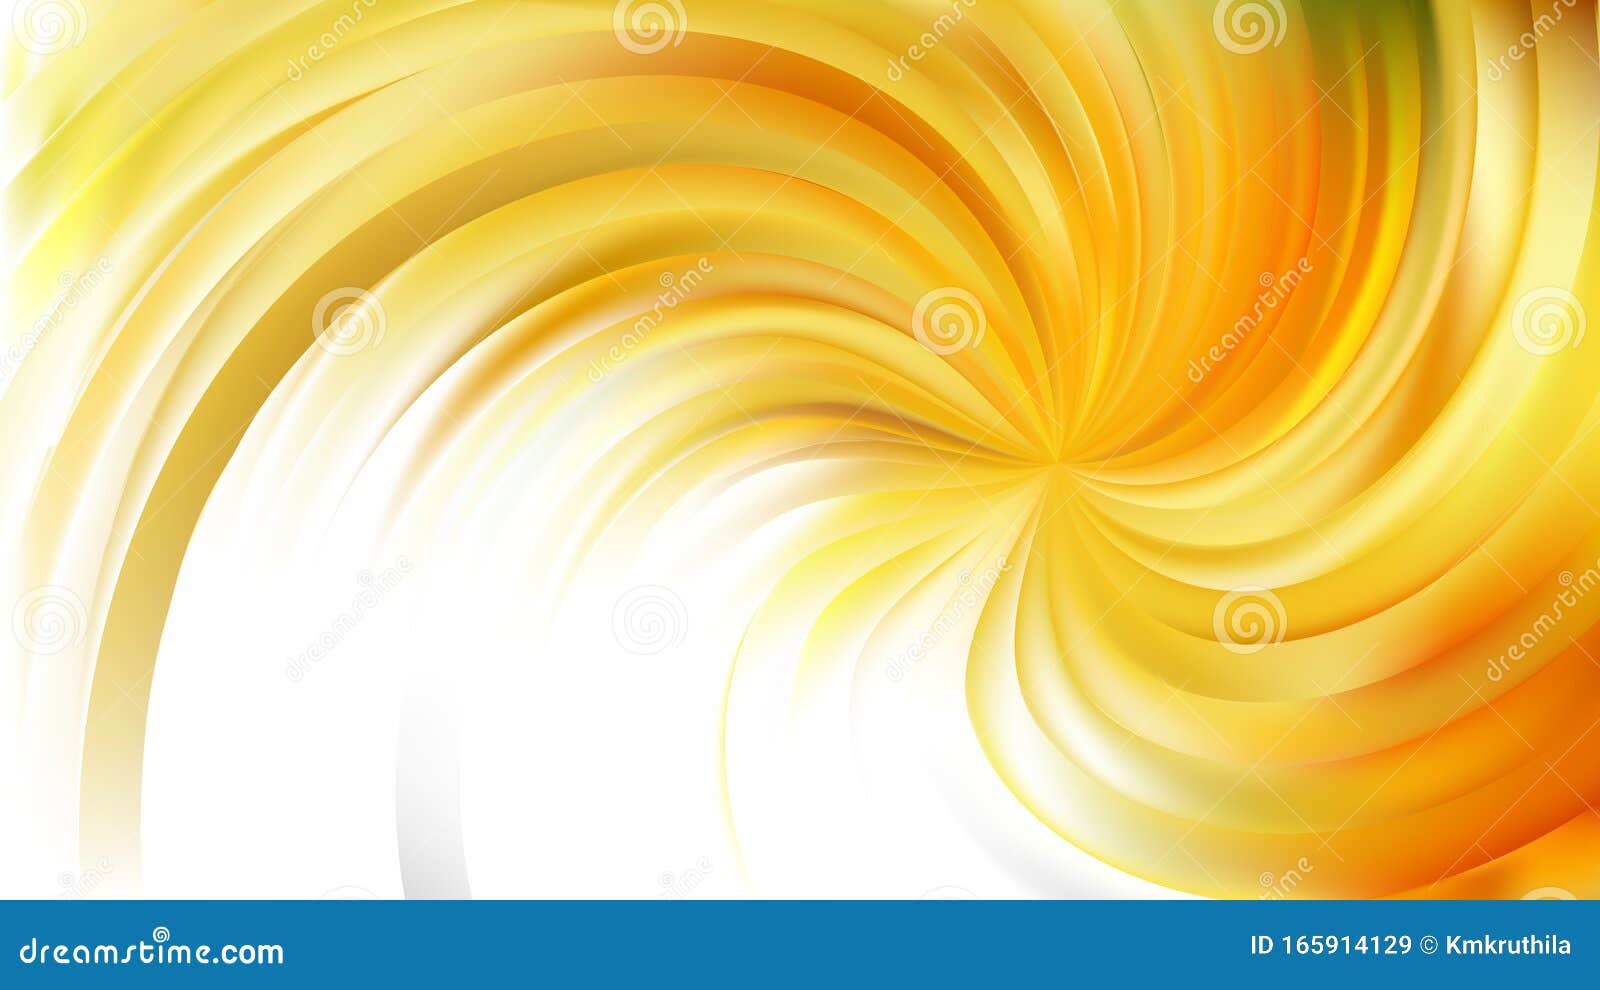 Abstract Light Yellow Swirl Background Image Stock Vector - Illustration of  twist, graphics: 165914129